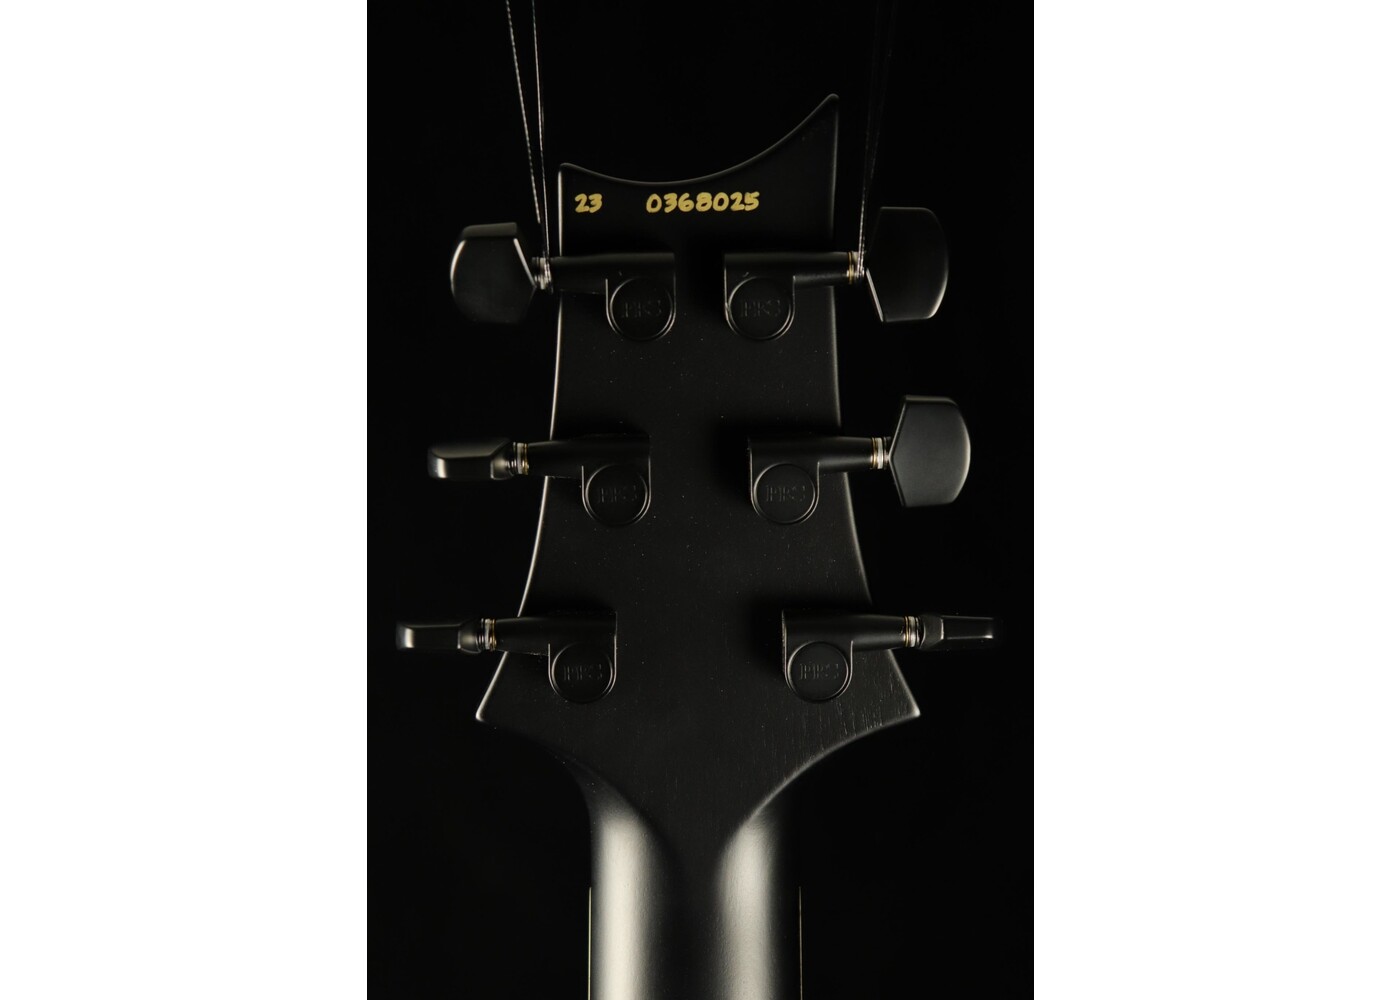 PRS Guitars PRS DW CE 24 “Floyd” Electric Guitar - Grey Black